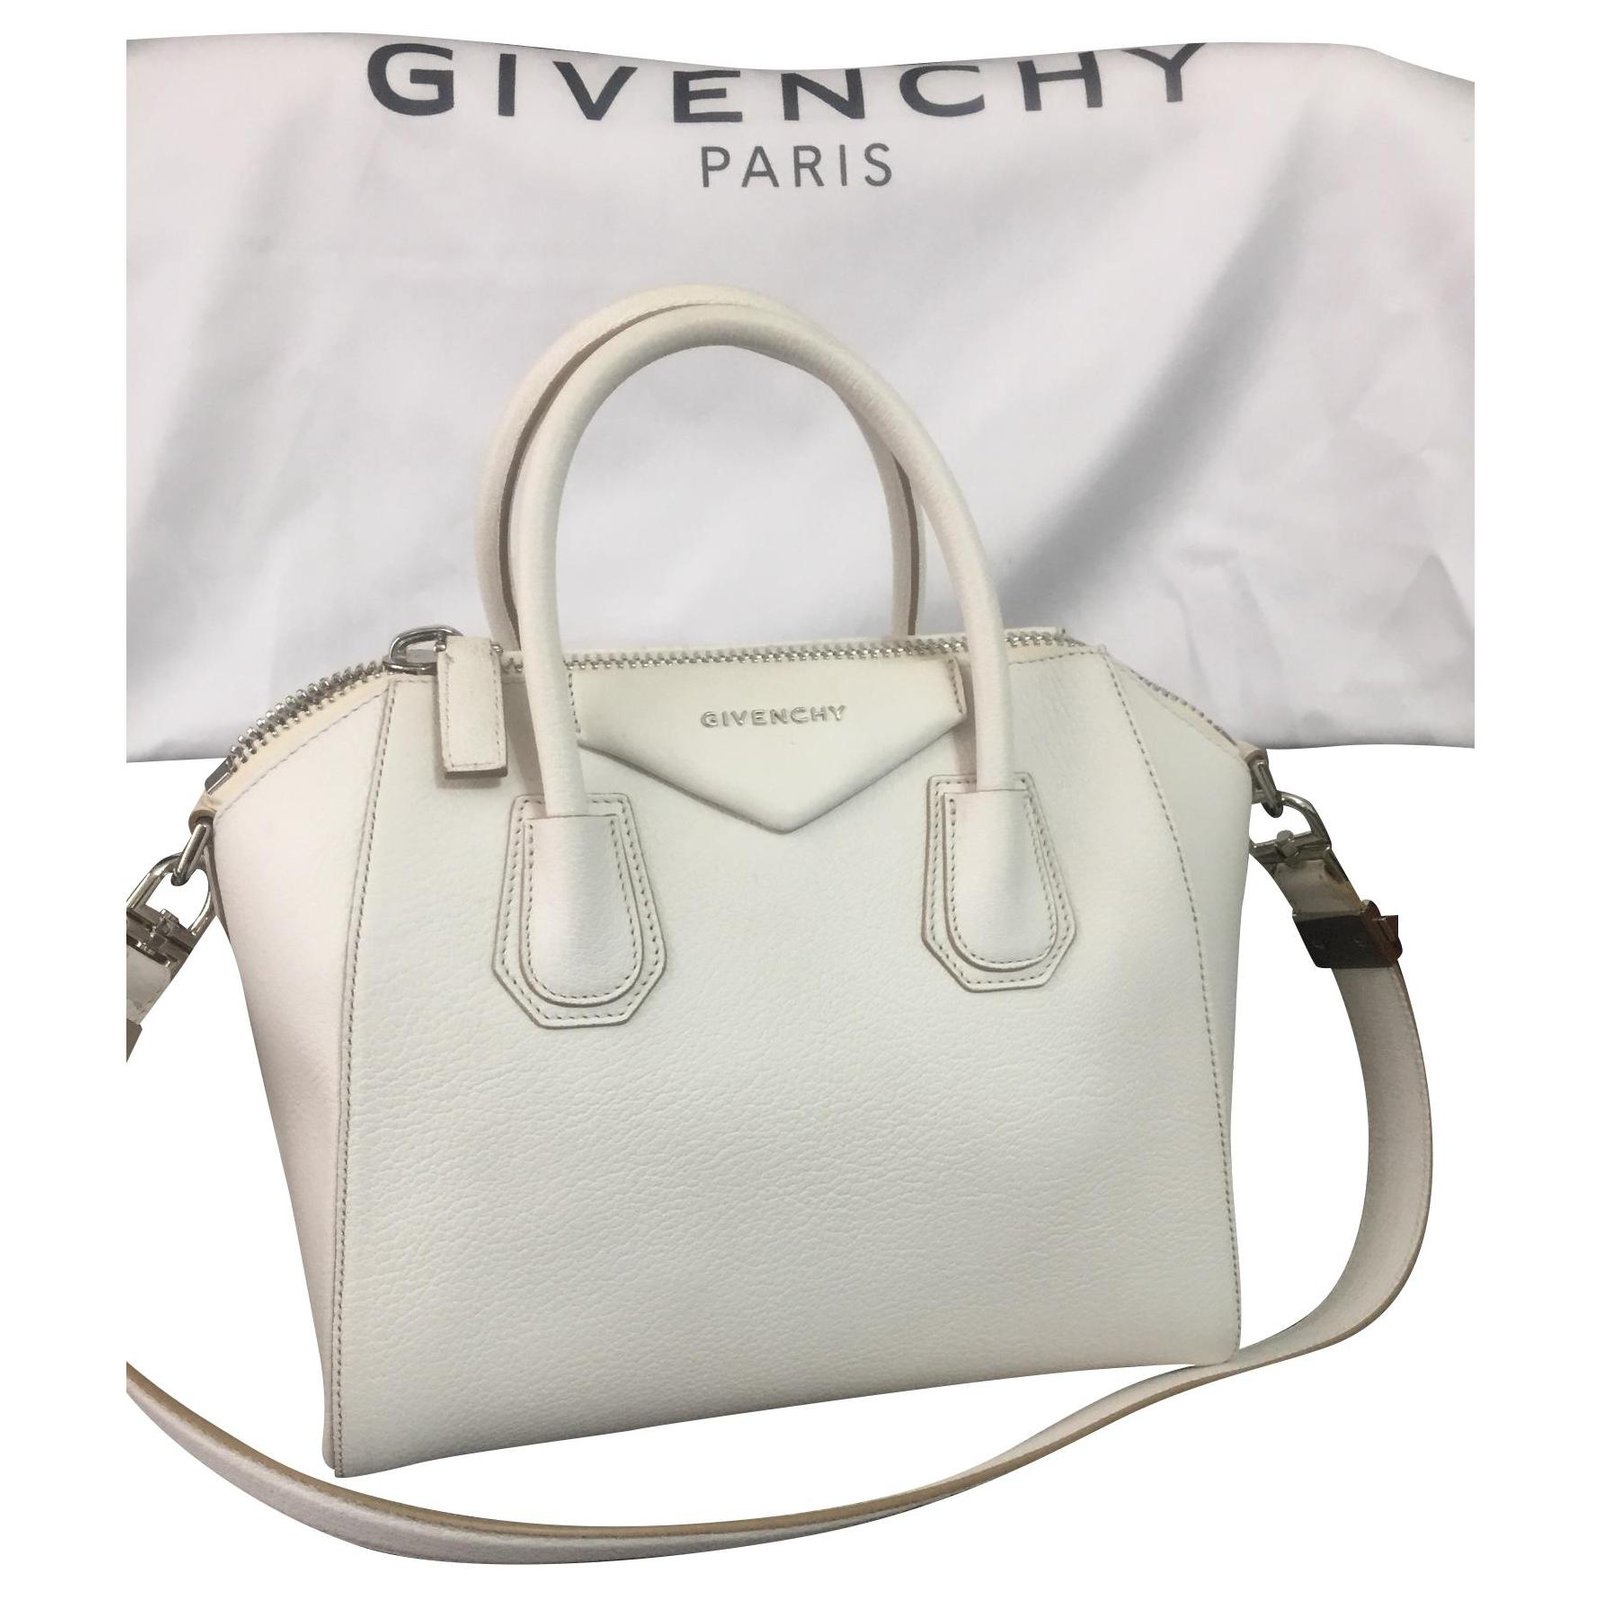 white givenchy bag